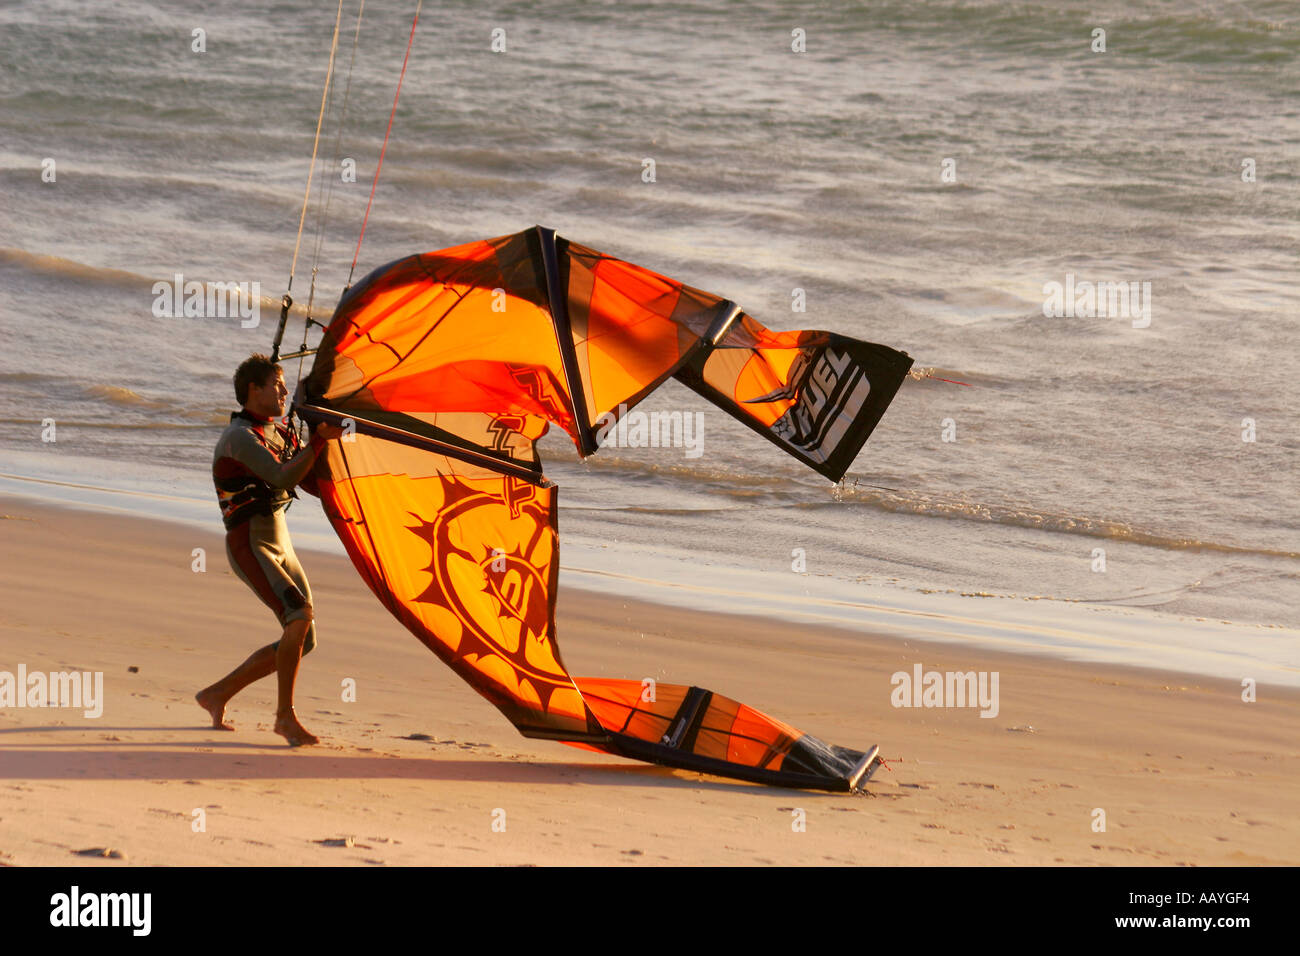 south africa cape town bloubergstrand kitesurfer Stock Photo